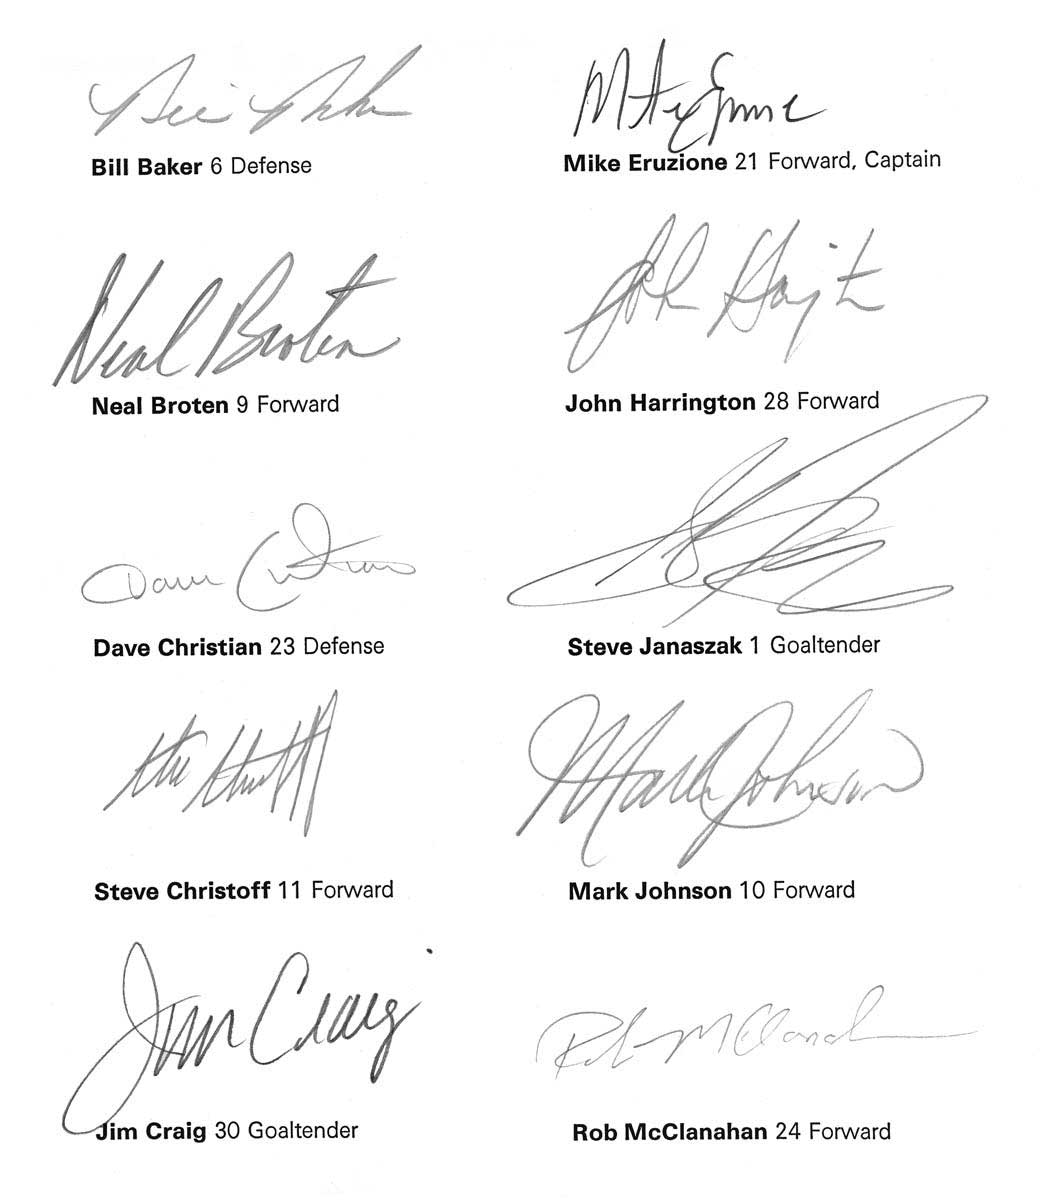 The 1980 US Olympic Hockey Team signatures